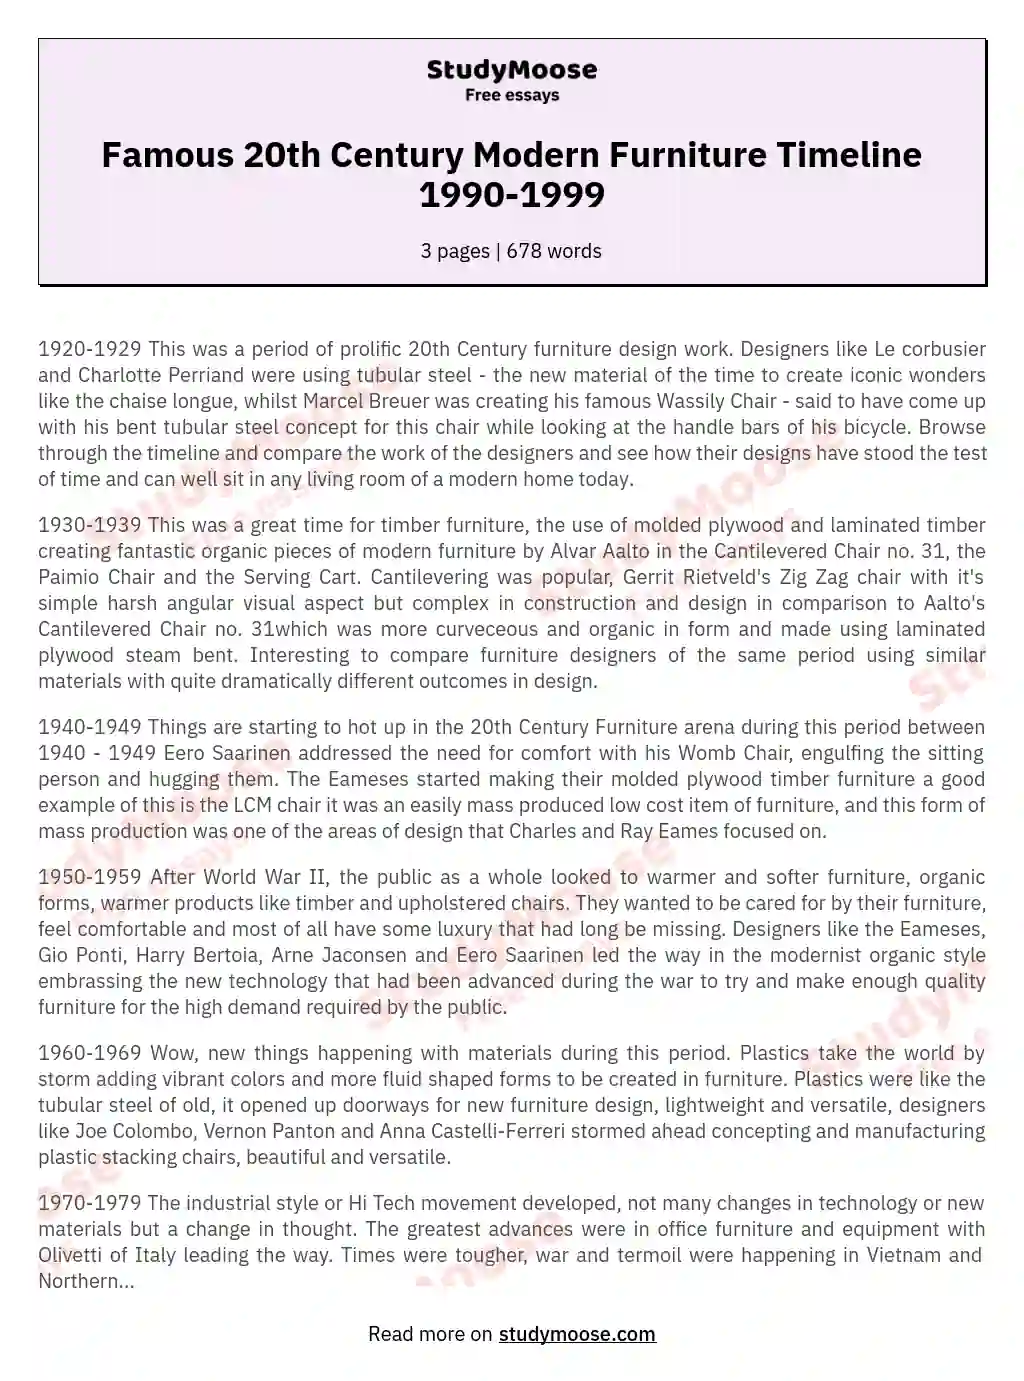 Famous 20th Century Modern Furniture Timeline 1990-1999 essay